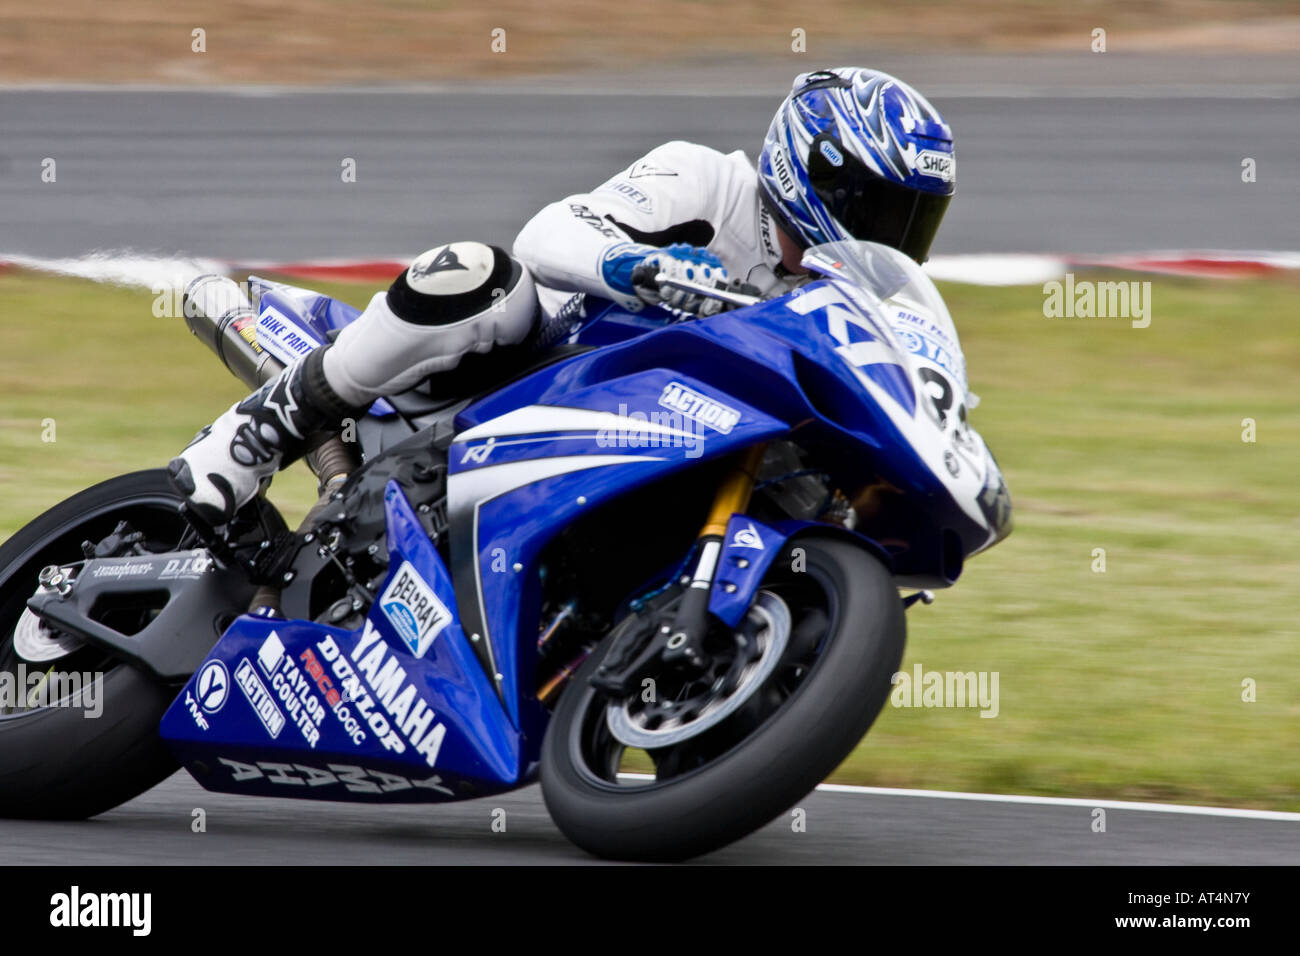 Trevor Taylor riding a Yamaha R1 Superbike Stock Photo